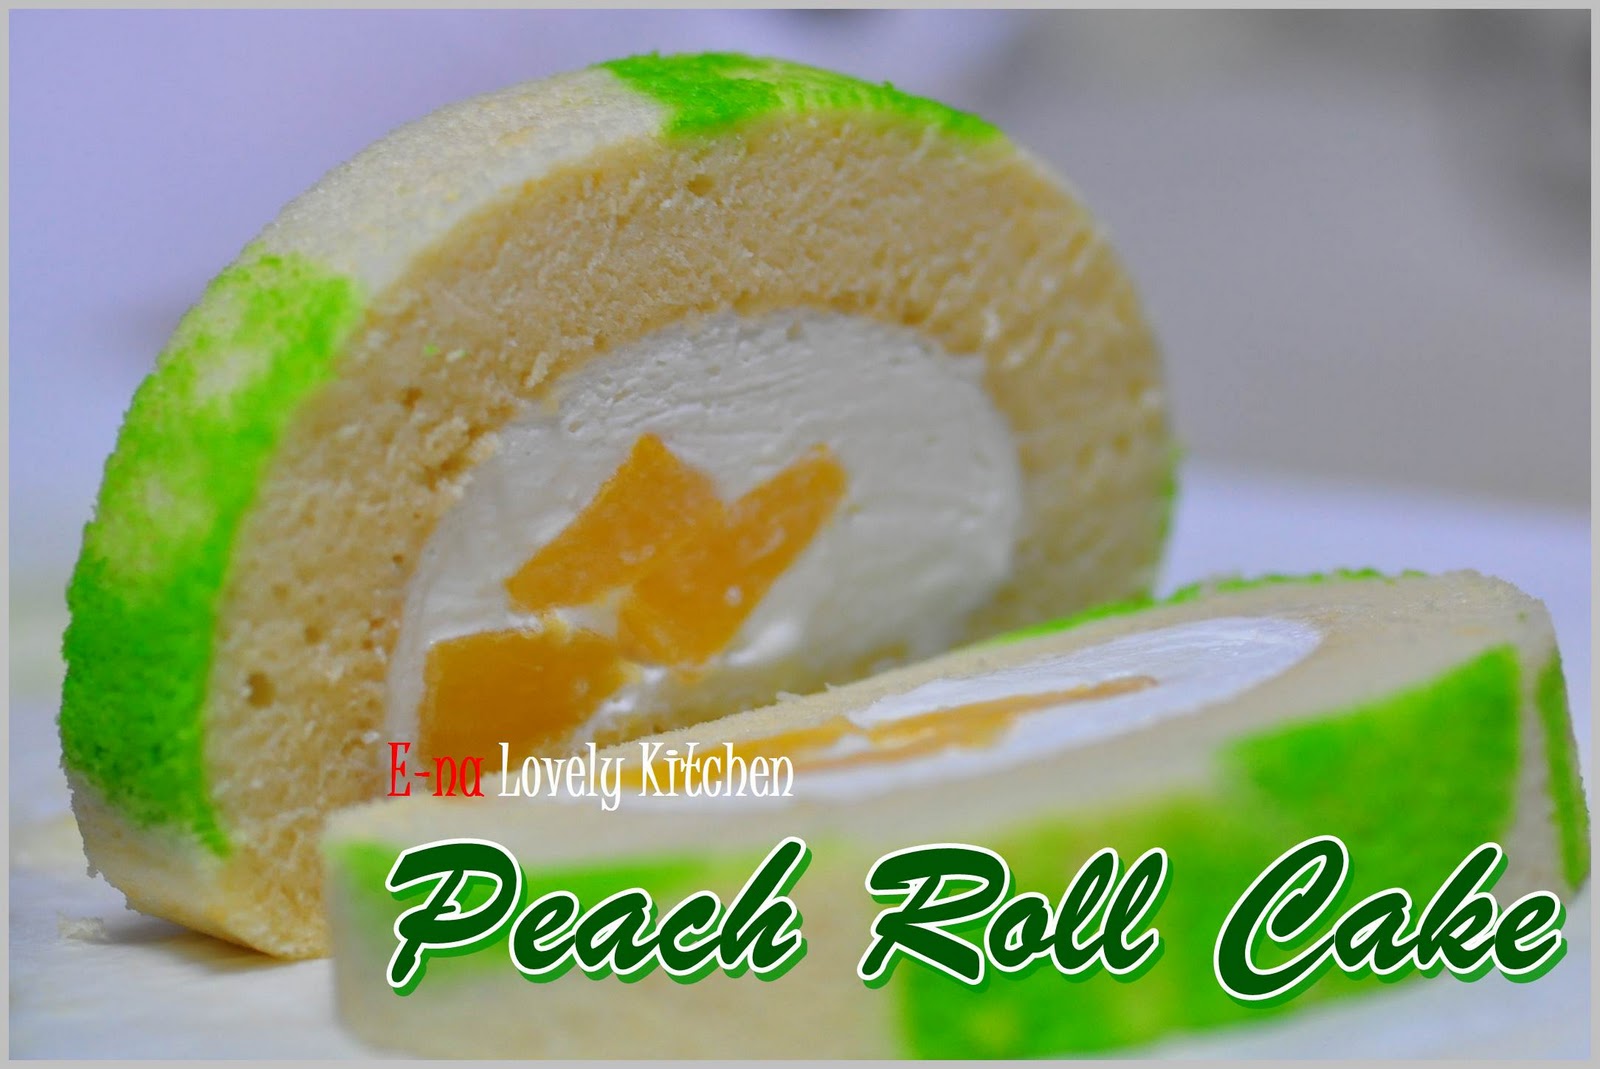 E-NA LOVELY KITCHEN ^_^: Peach Roll Cake